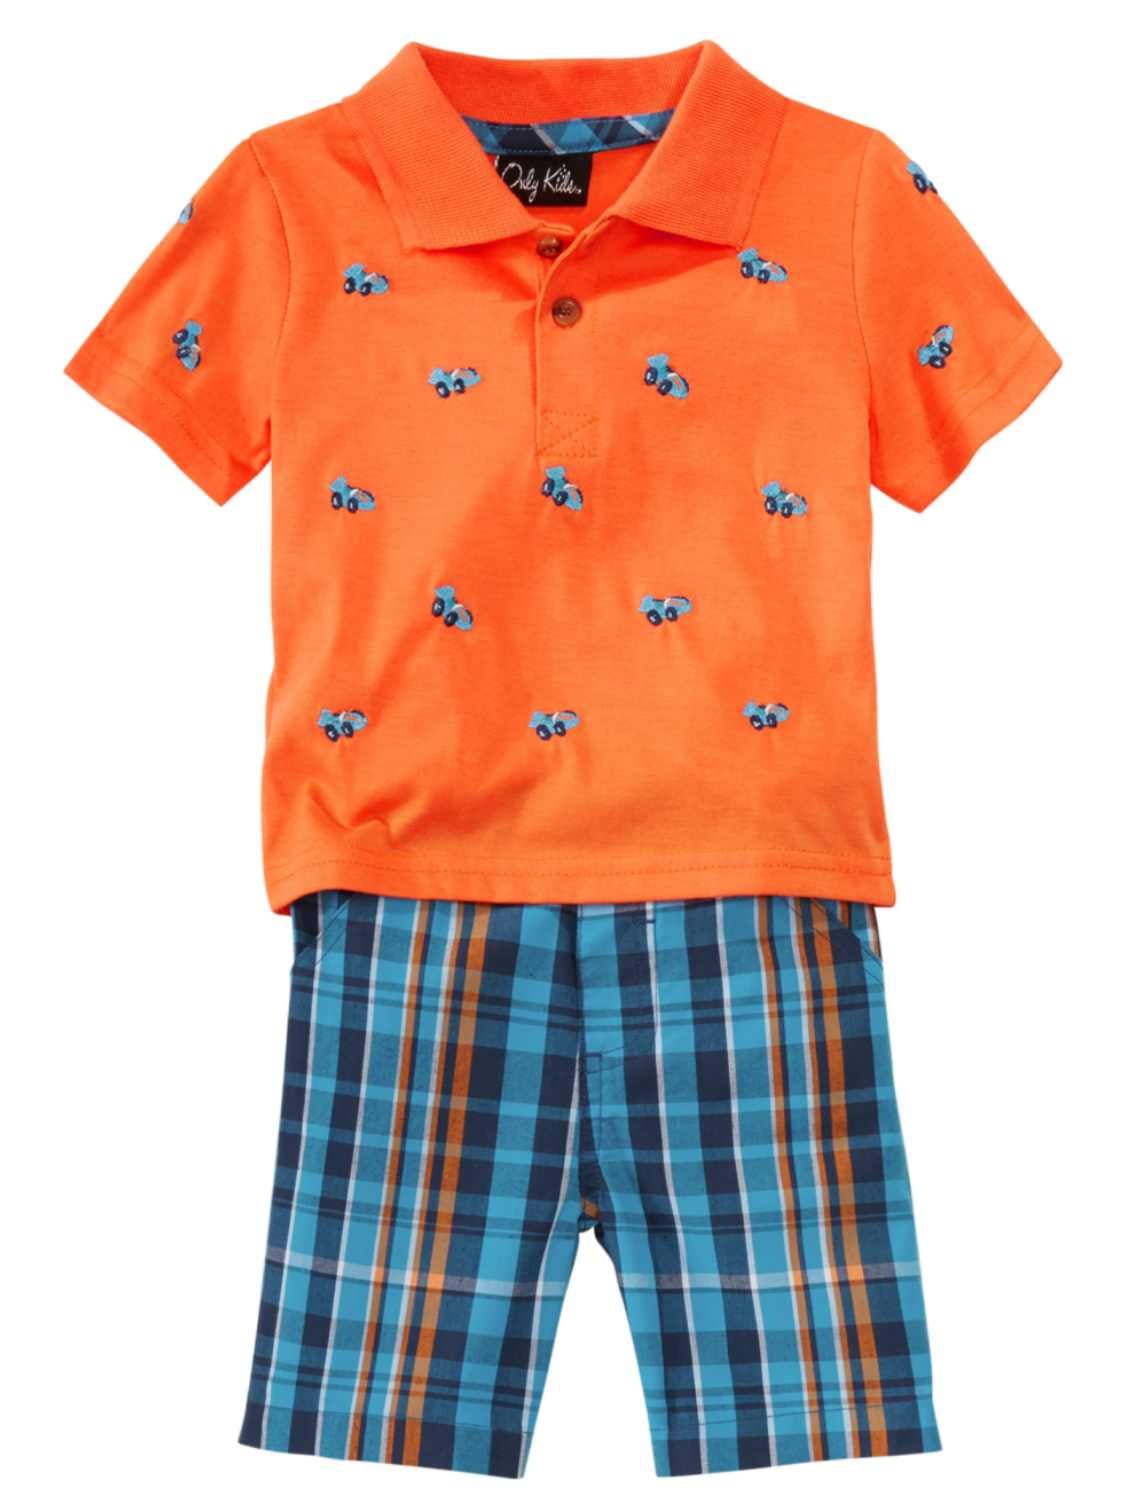 Nautica Boy Size 12 18 24 Months Outfit Set Orange Polo Shirt Khaki Tan Shorts 